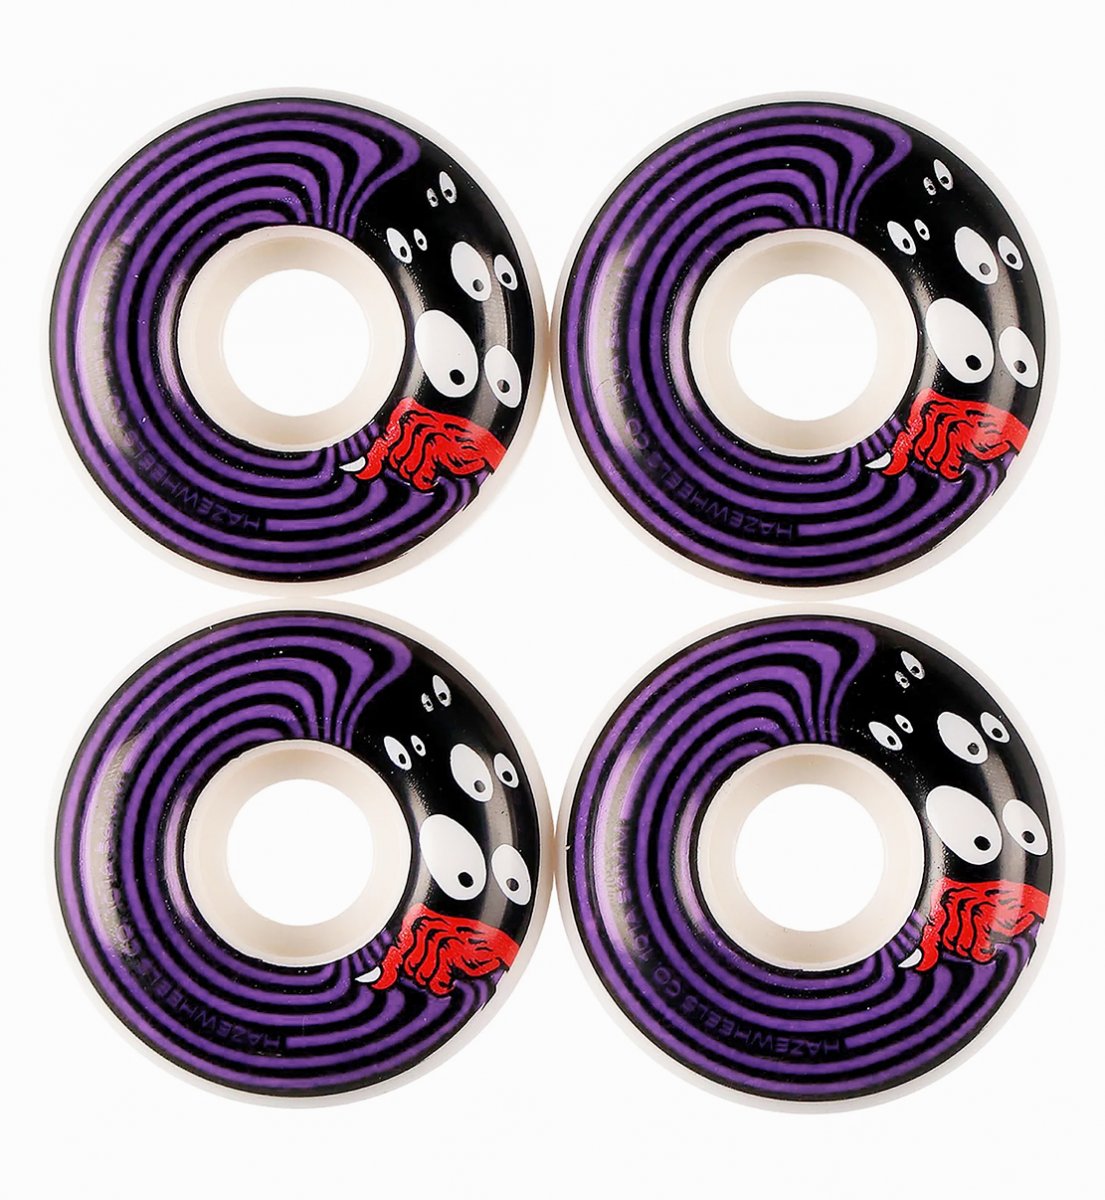 Haze wheels Ruote professionali Skateboard Sneak 54mm 101 a - Confezione 4 Ruote Haze wheels